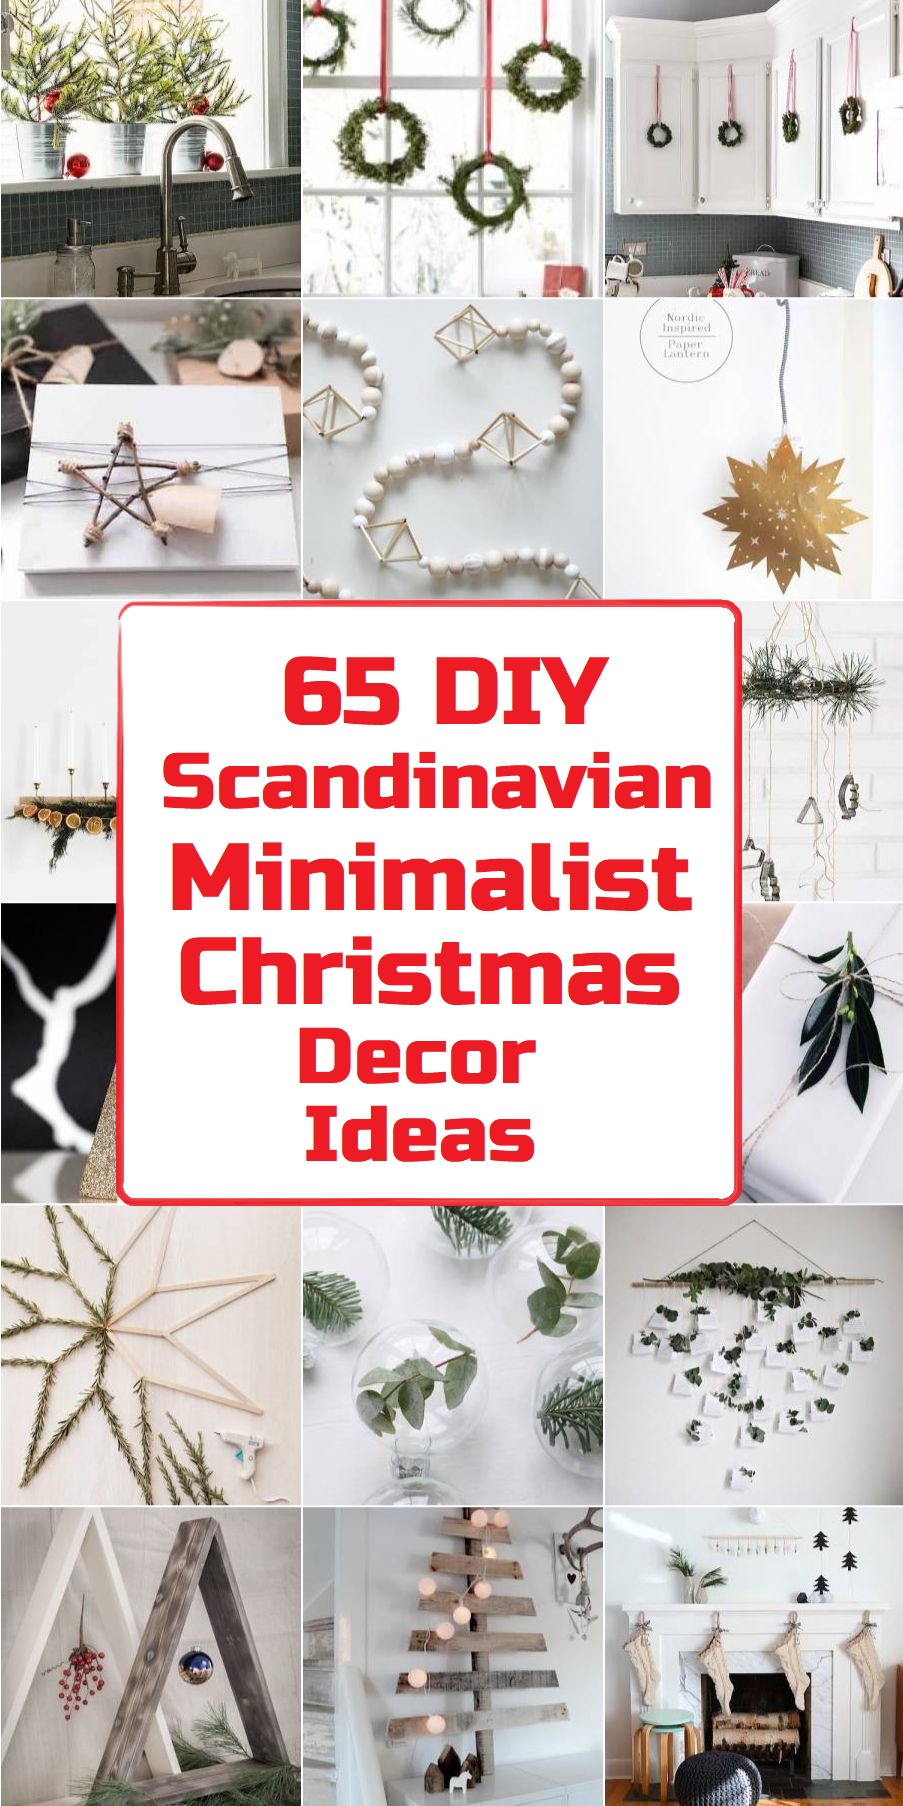 65 DIY Scandinavian Minimalist Christmas Decor Ideas | TOPppINFO.com